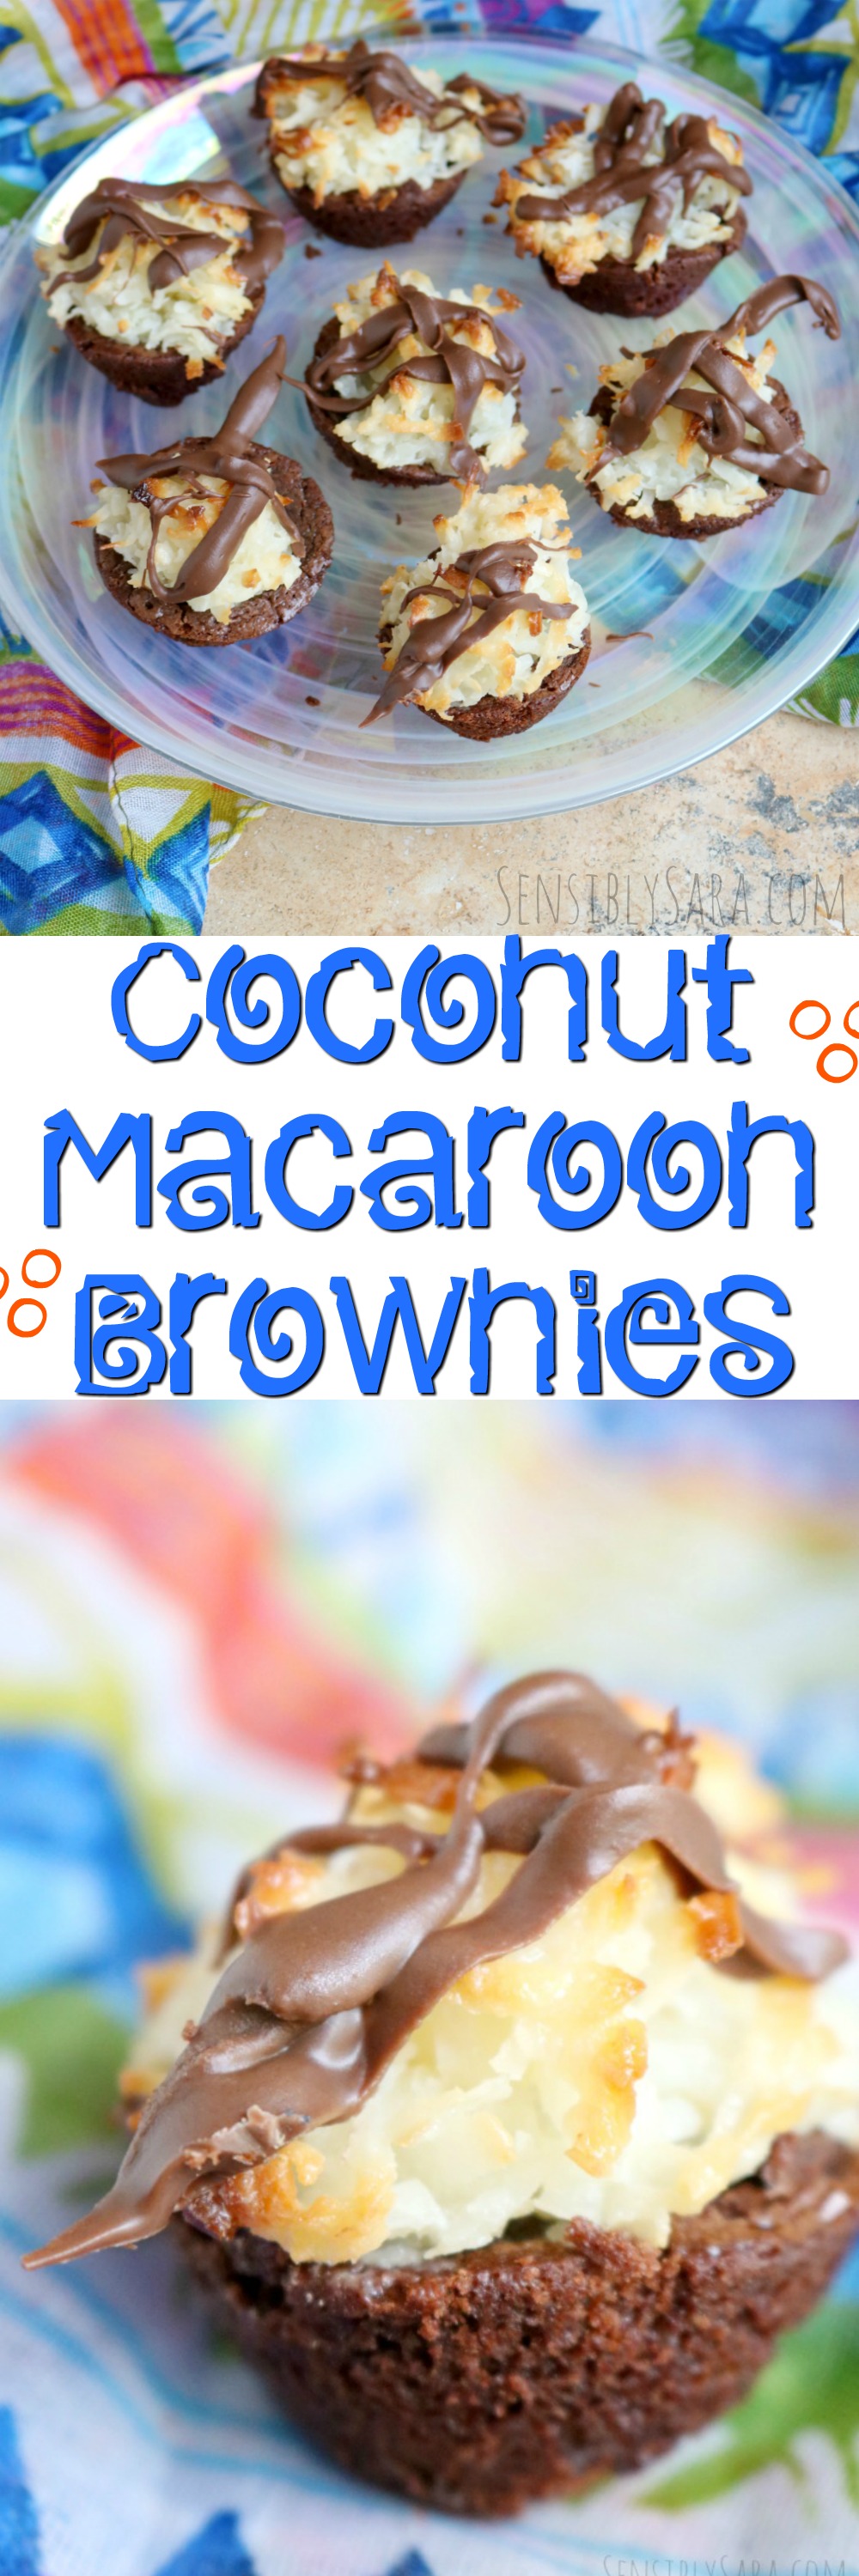 Coconut Macaroon Brownies | SensiblySara.com